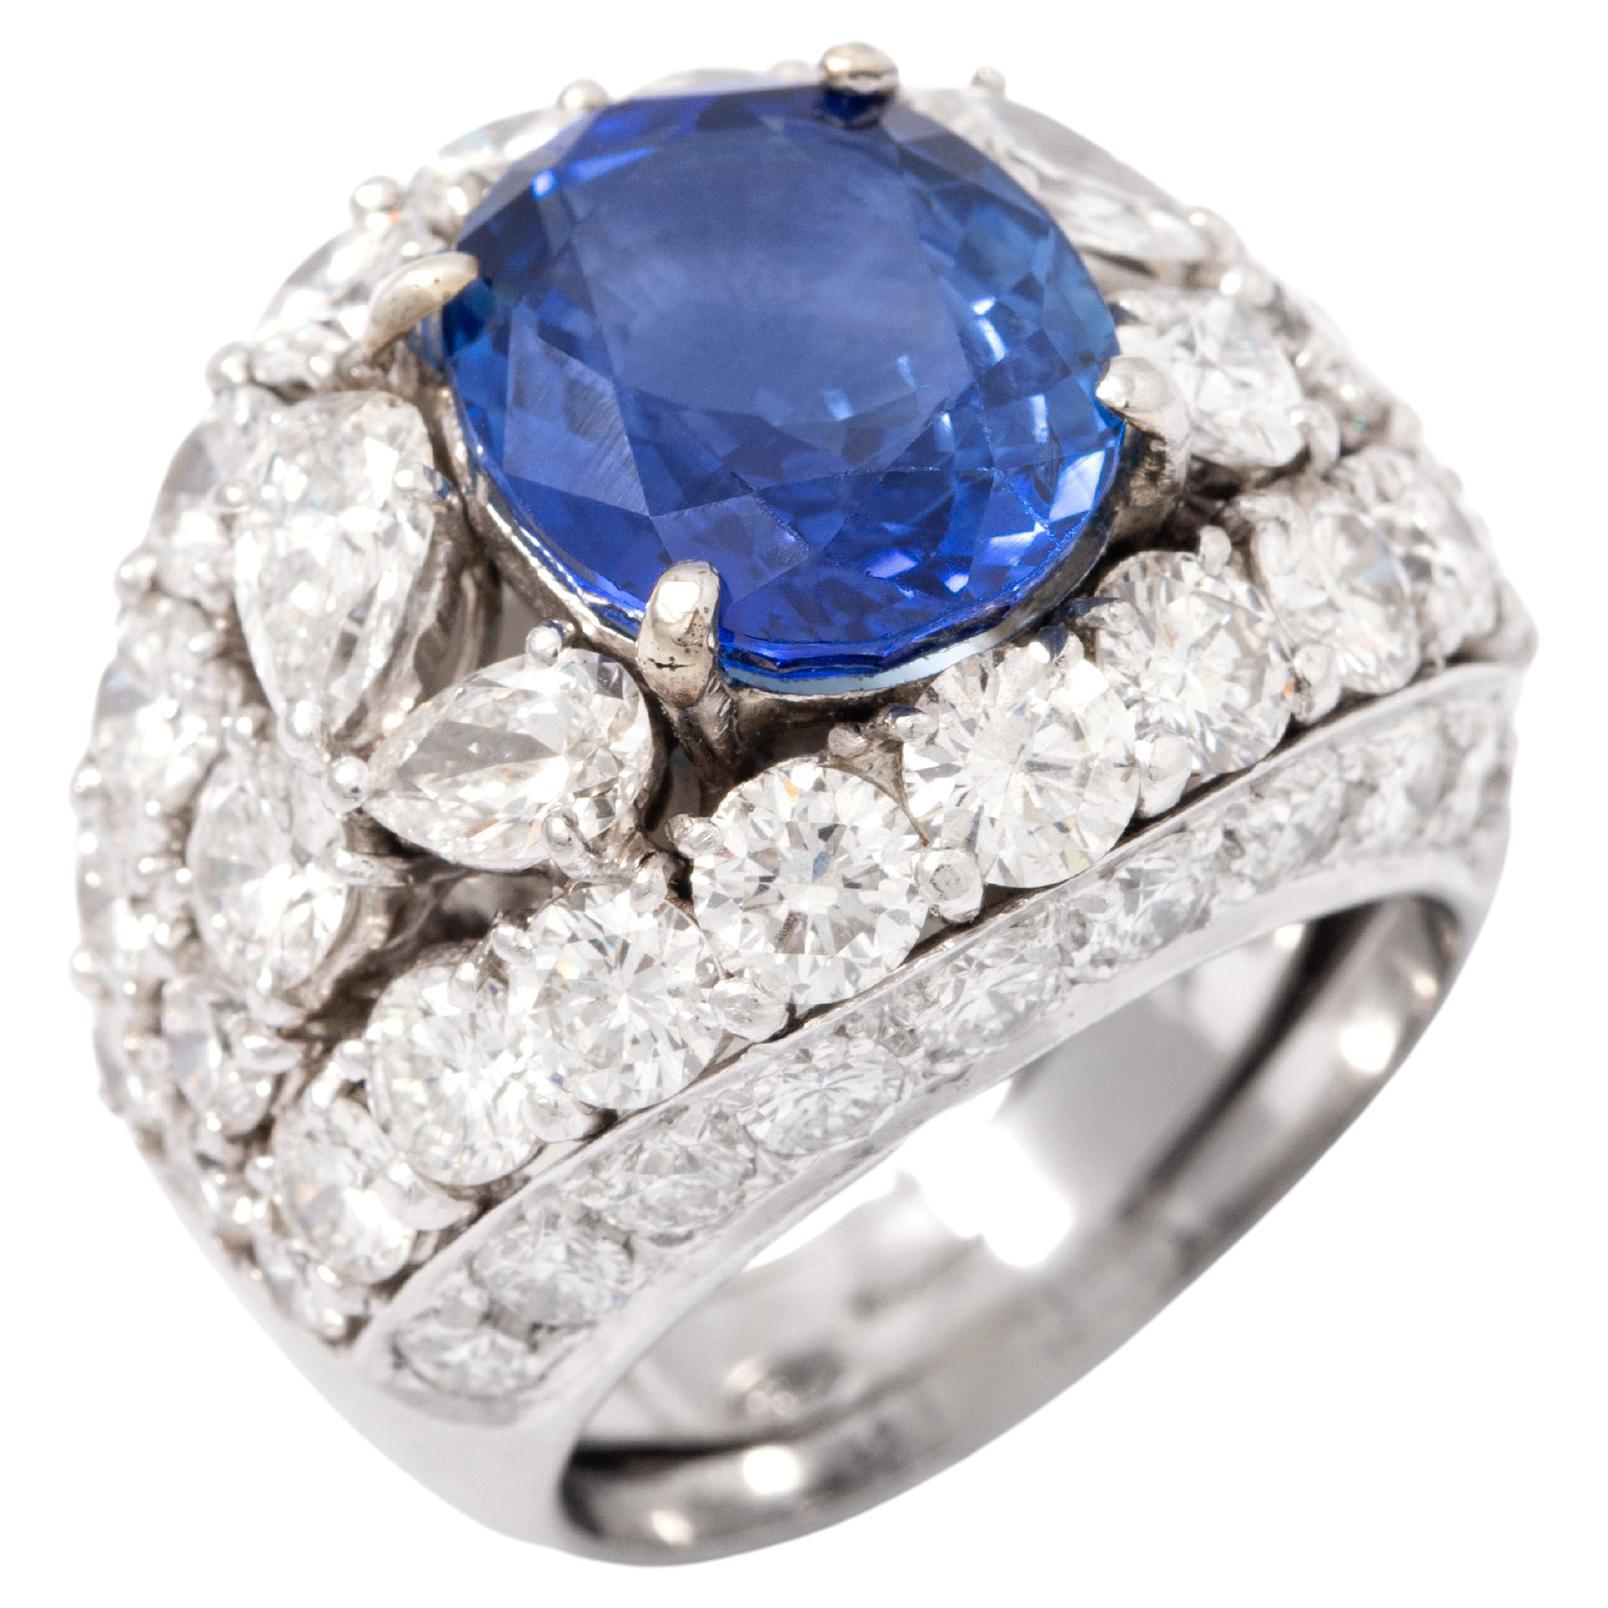 Oval Cut 7.33 Carat Sapphire Diamond Ring For Sale